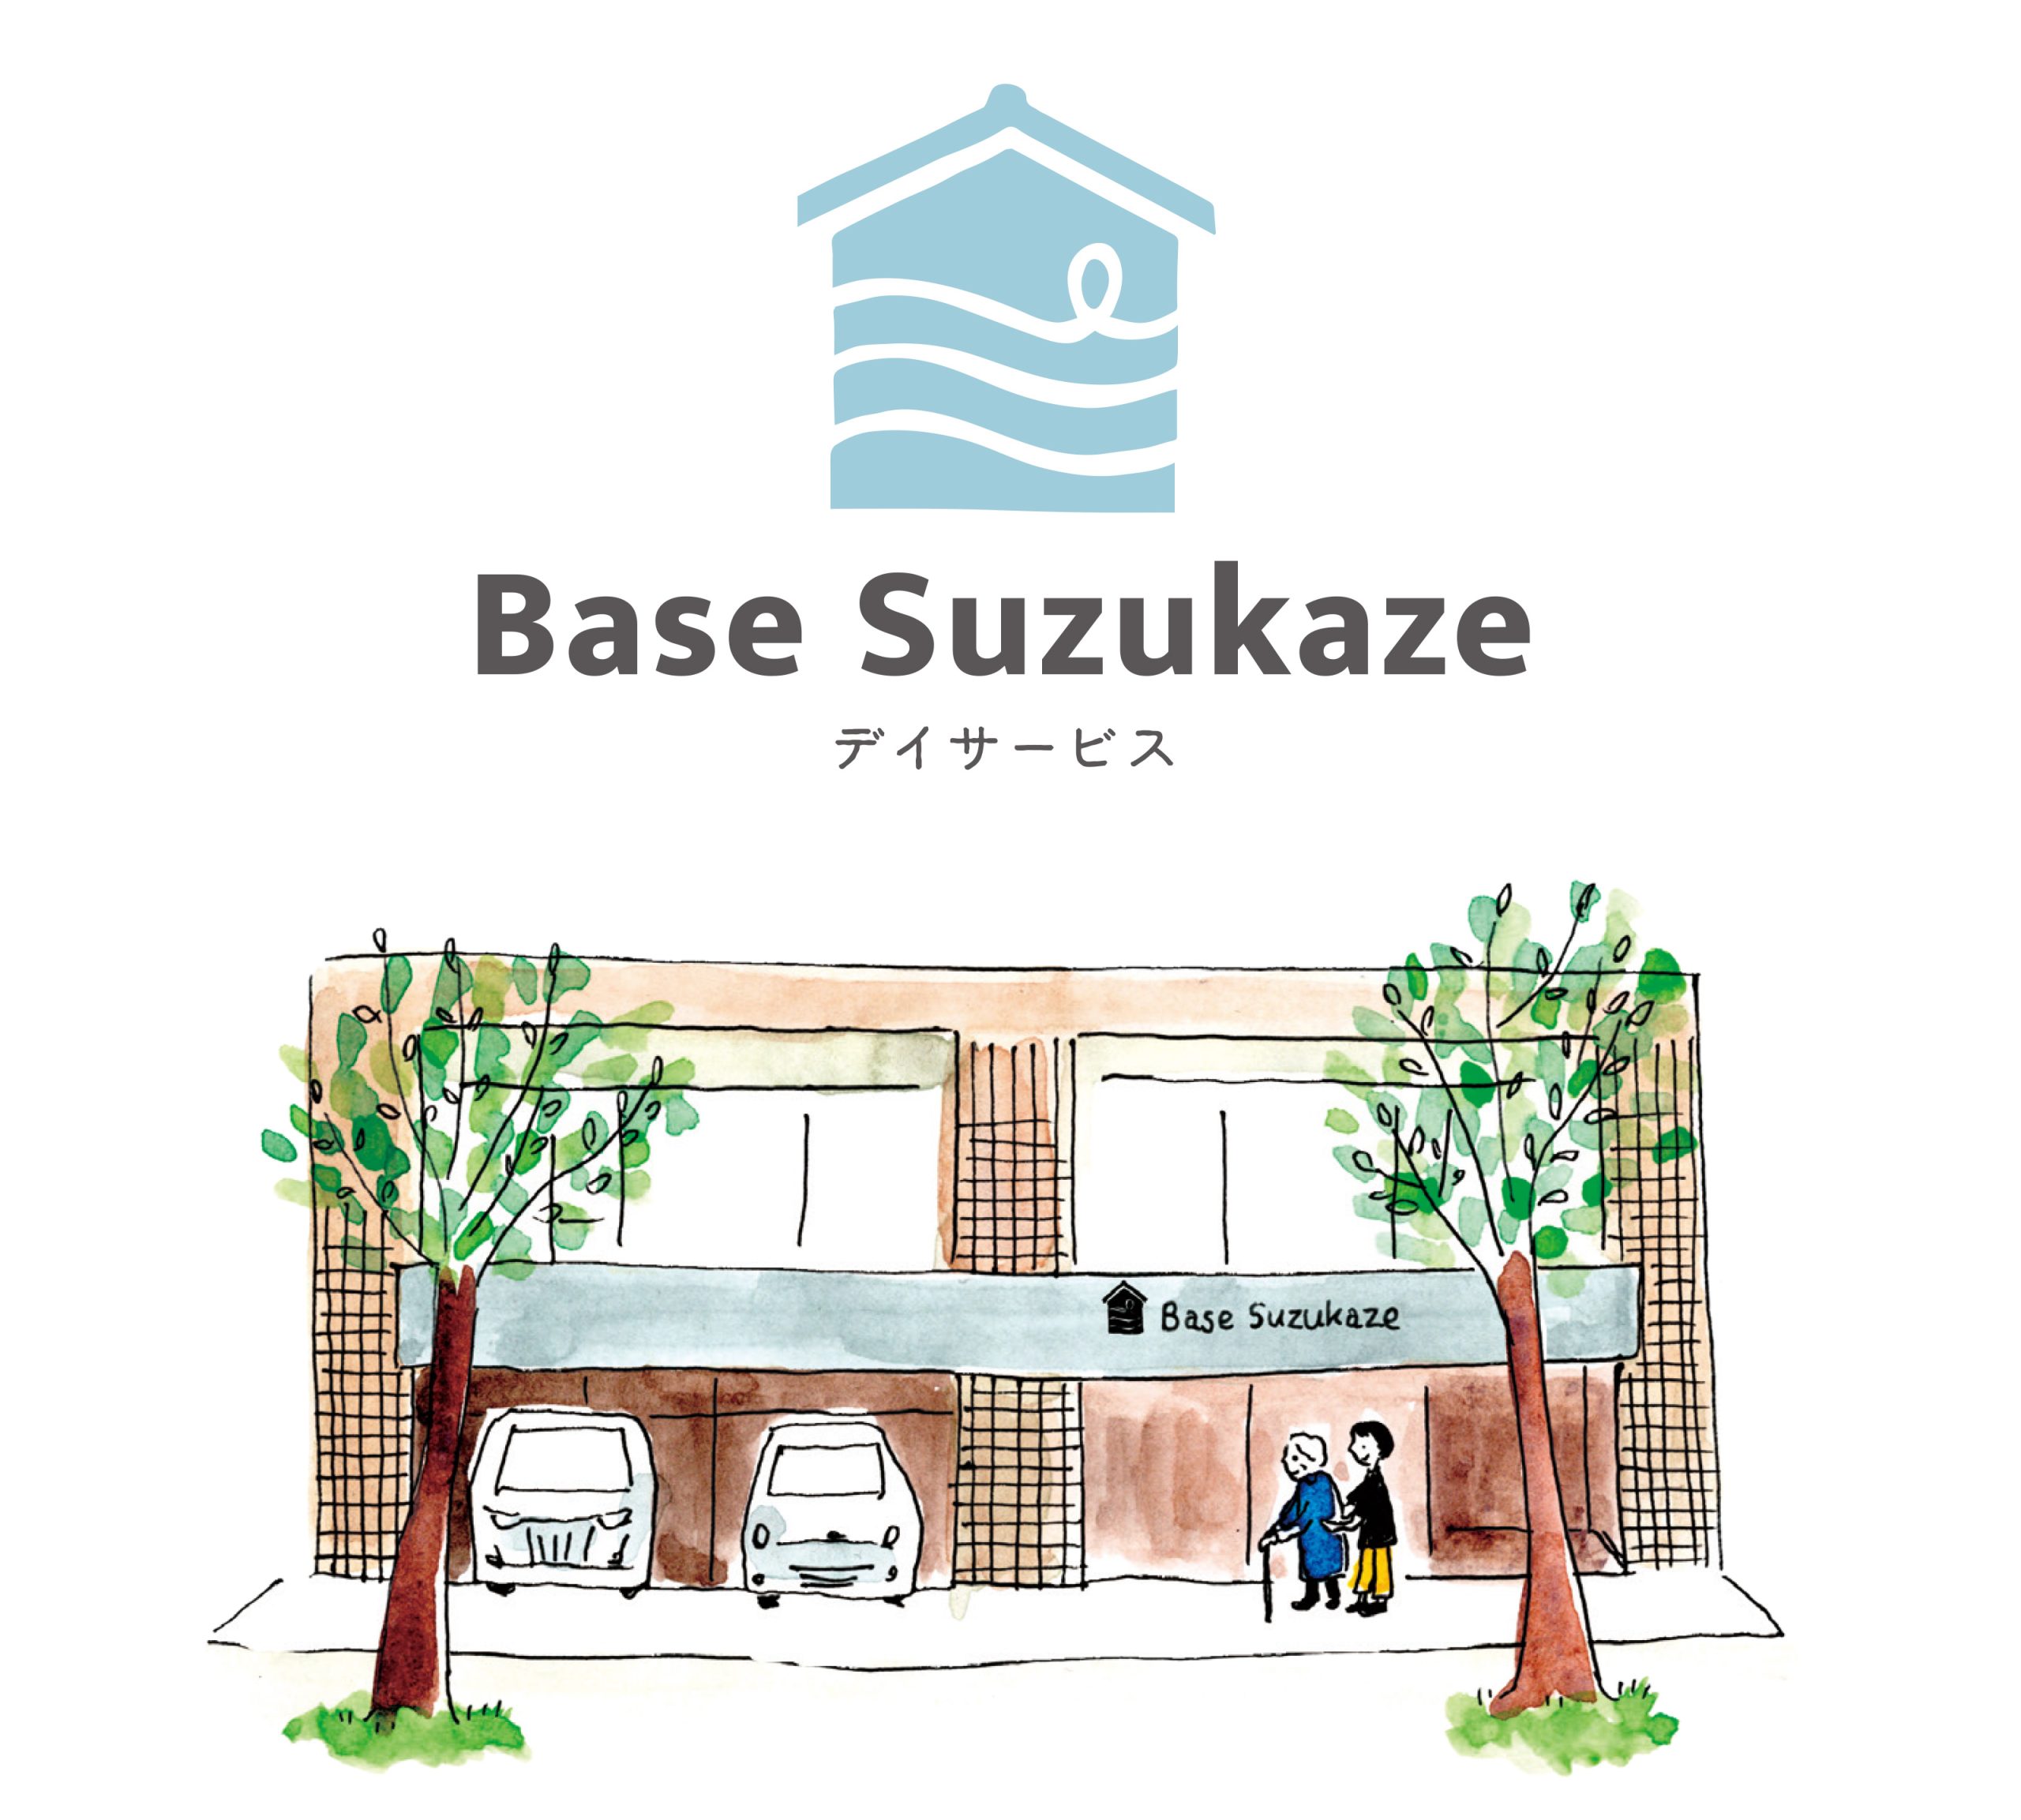 Base Suzukaze